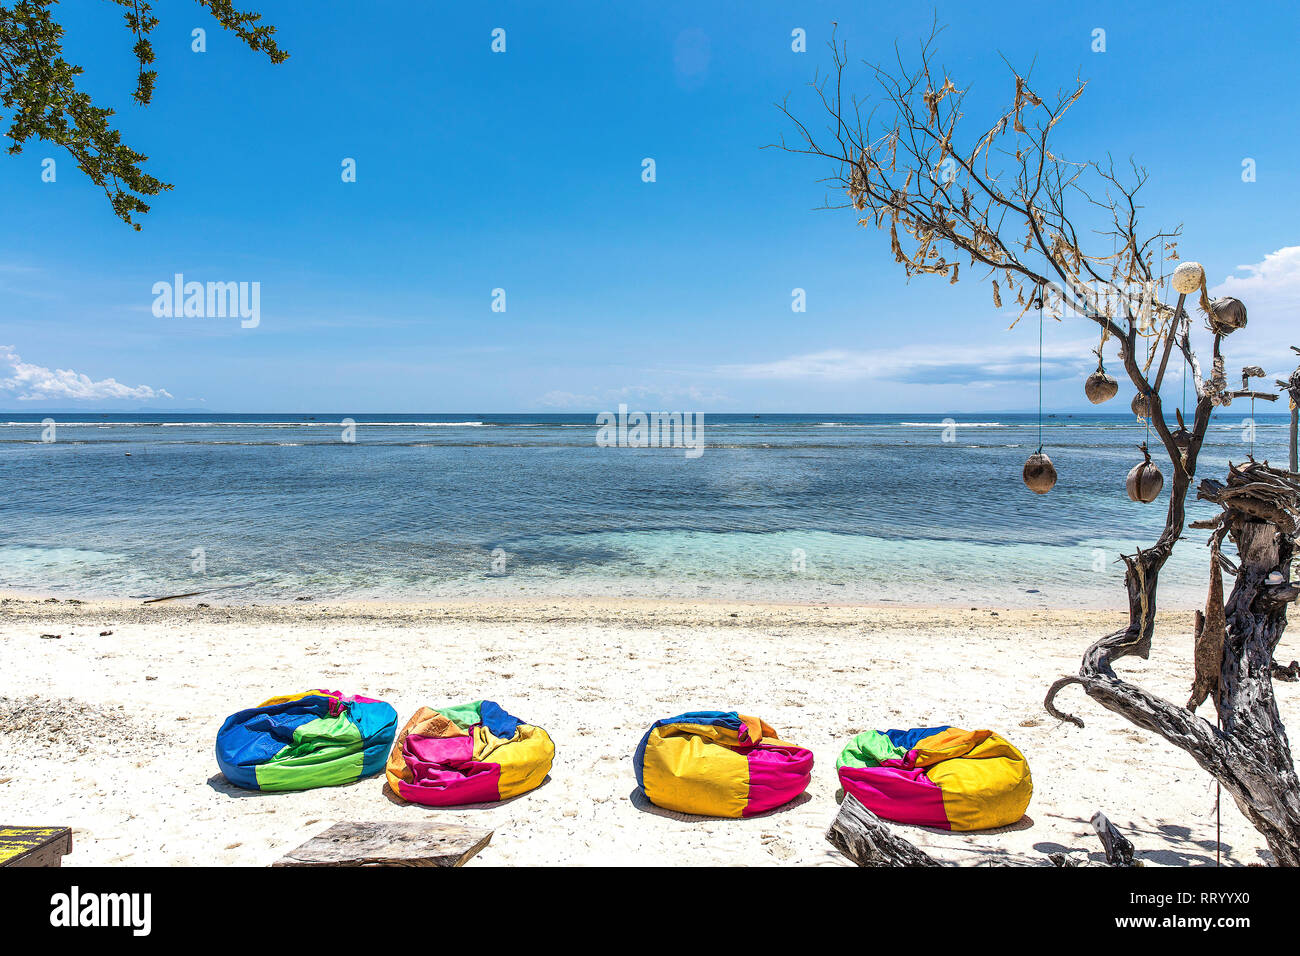 Colorful sunbeds on the beach of Gili Trawangan island, Indonesia. Stock Photo